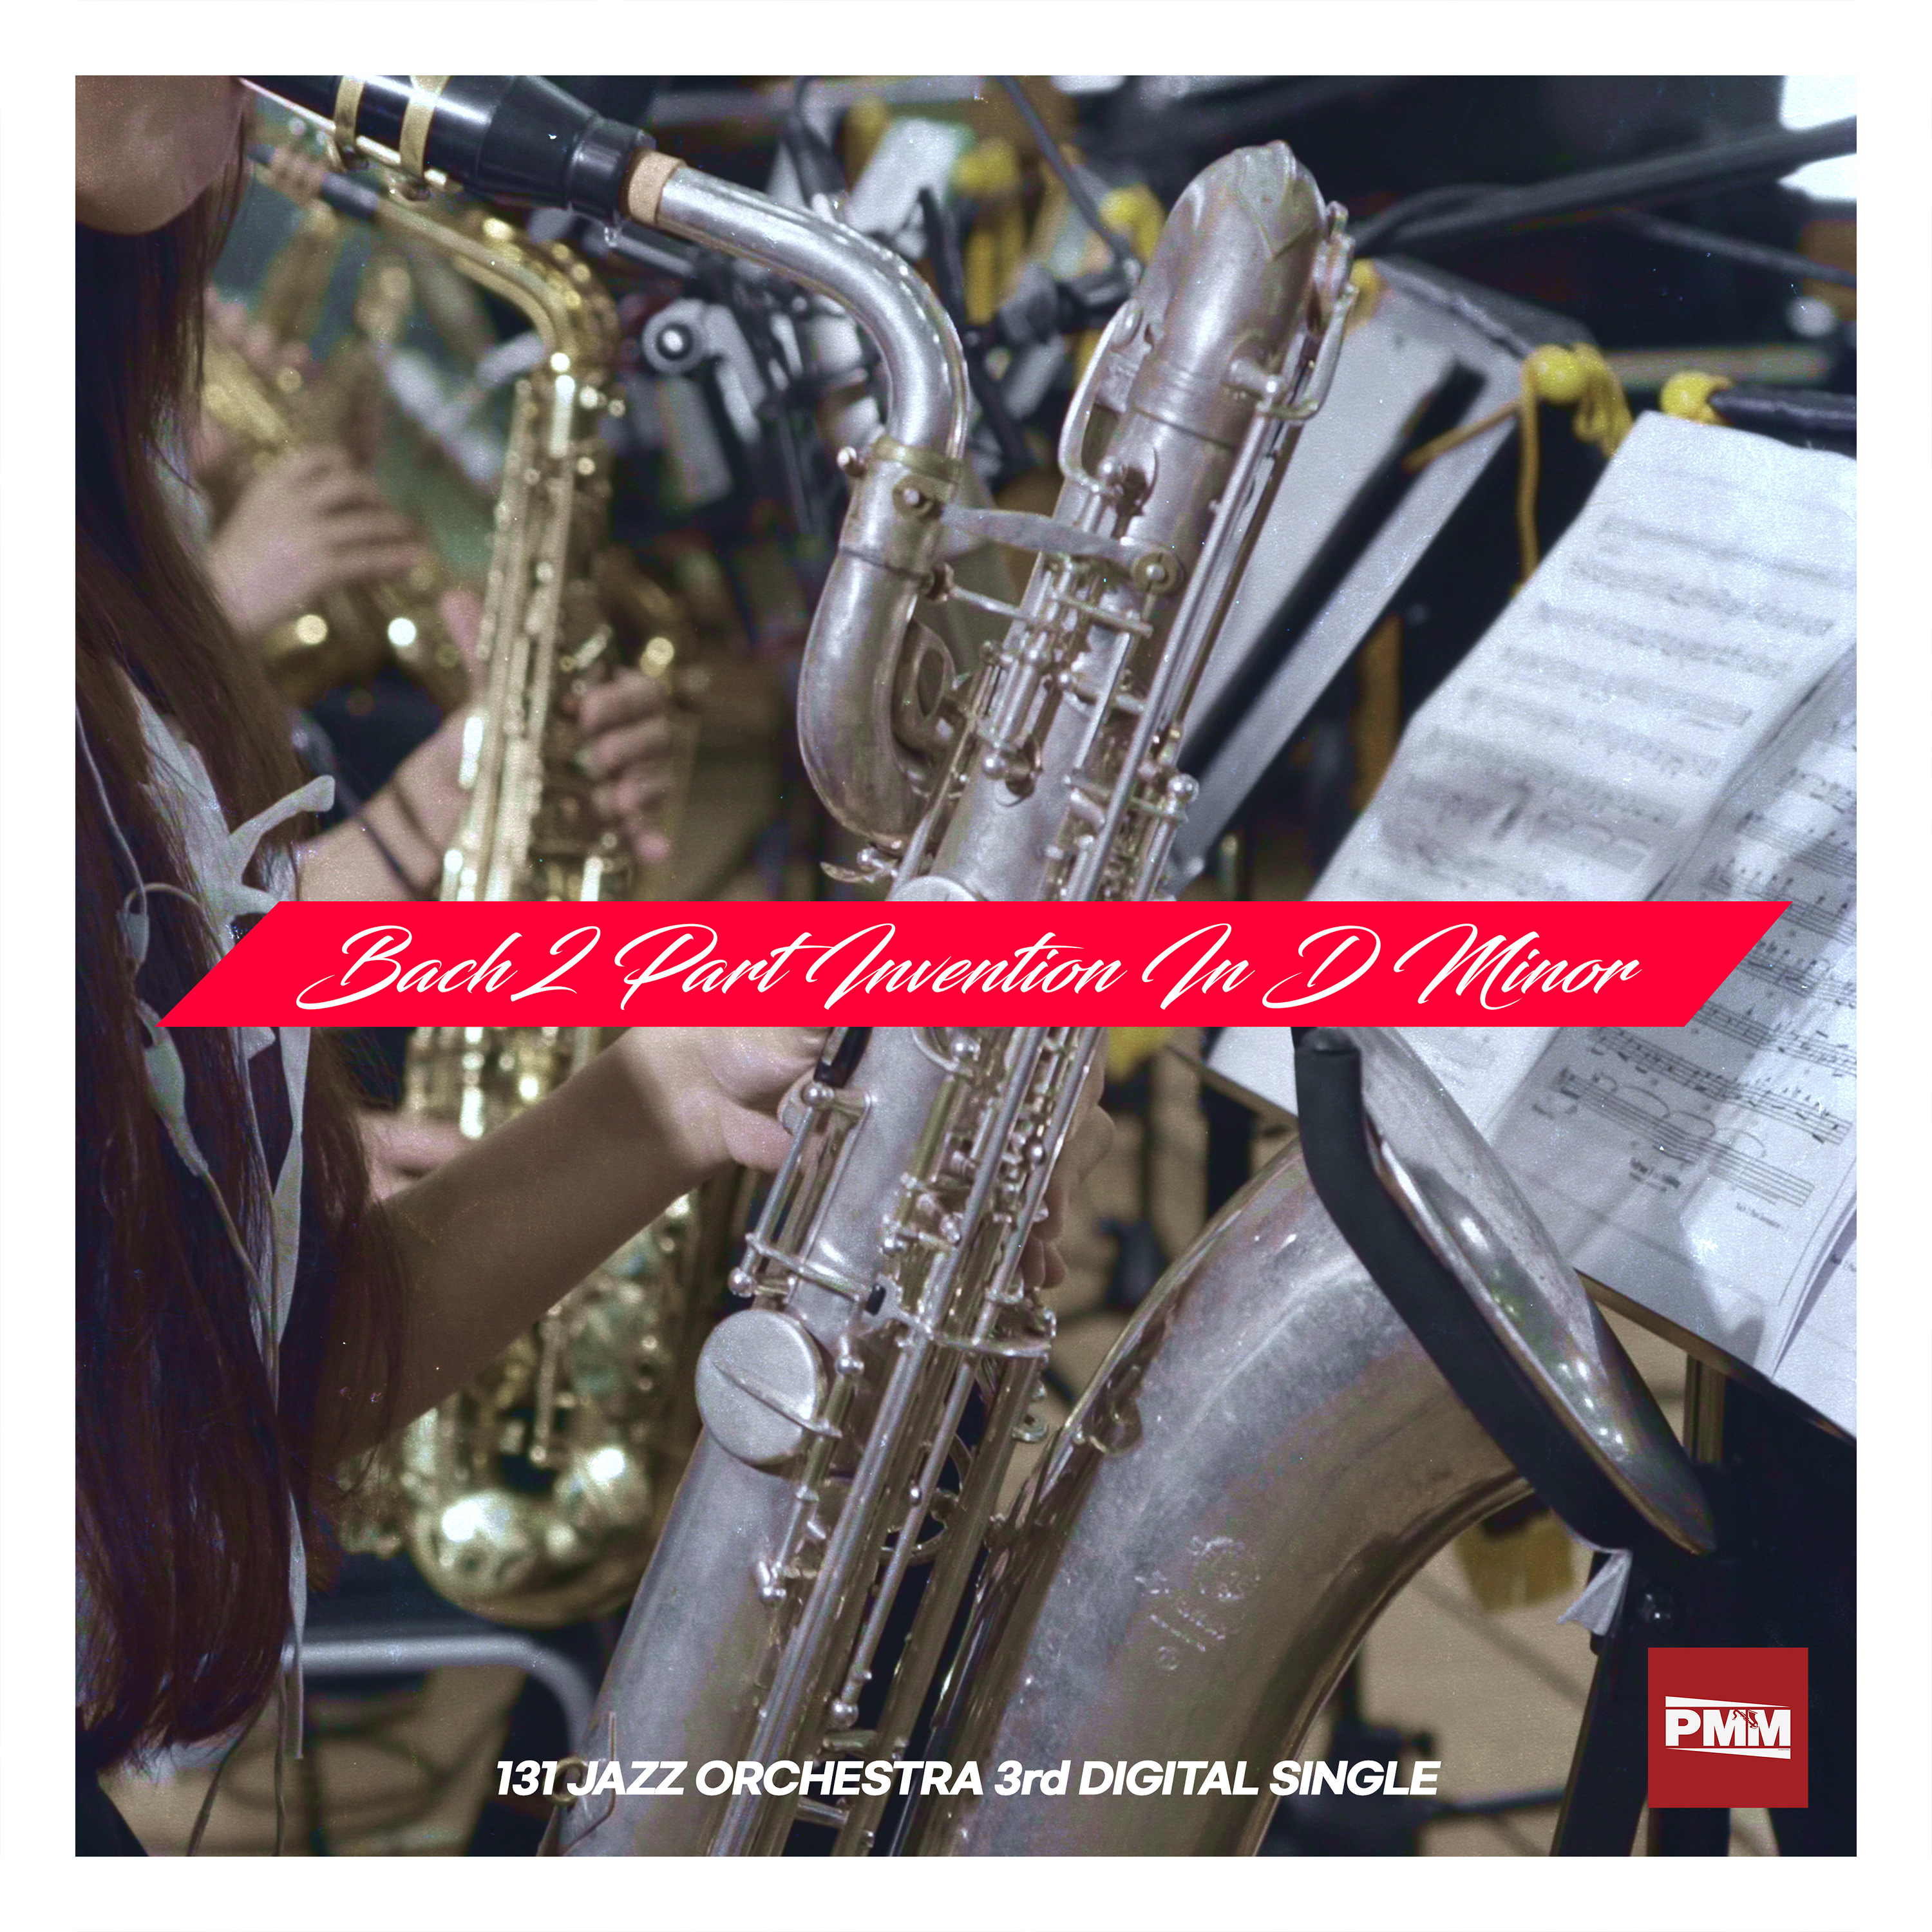 131 Jazz Orchestra 3rd Digital Single